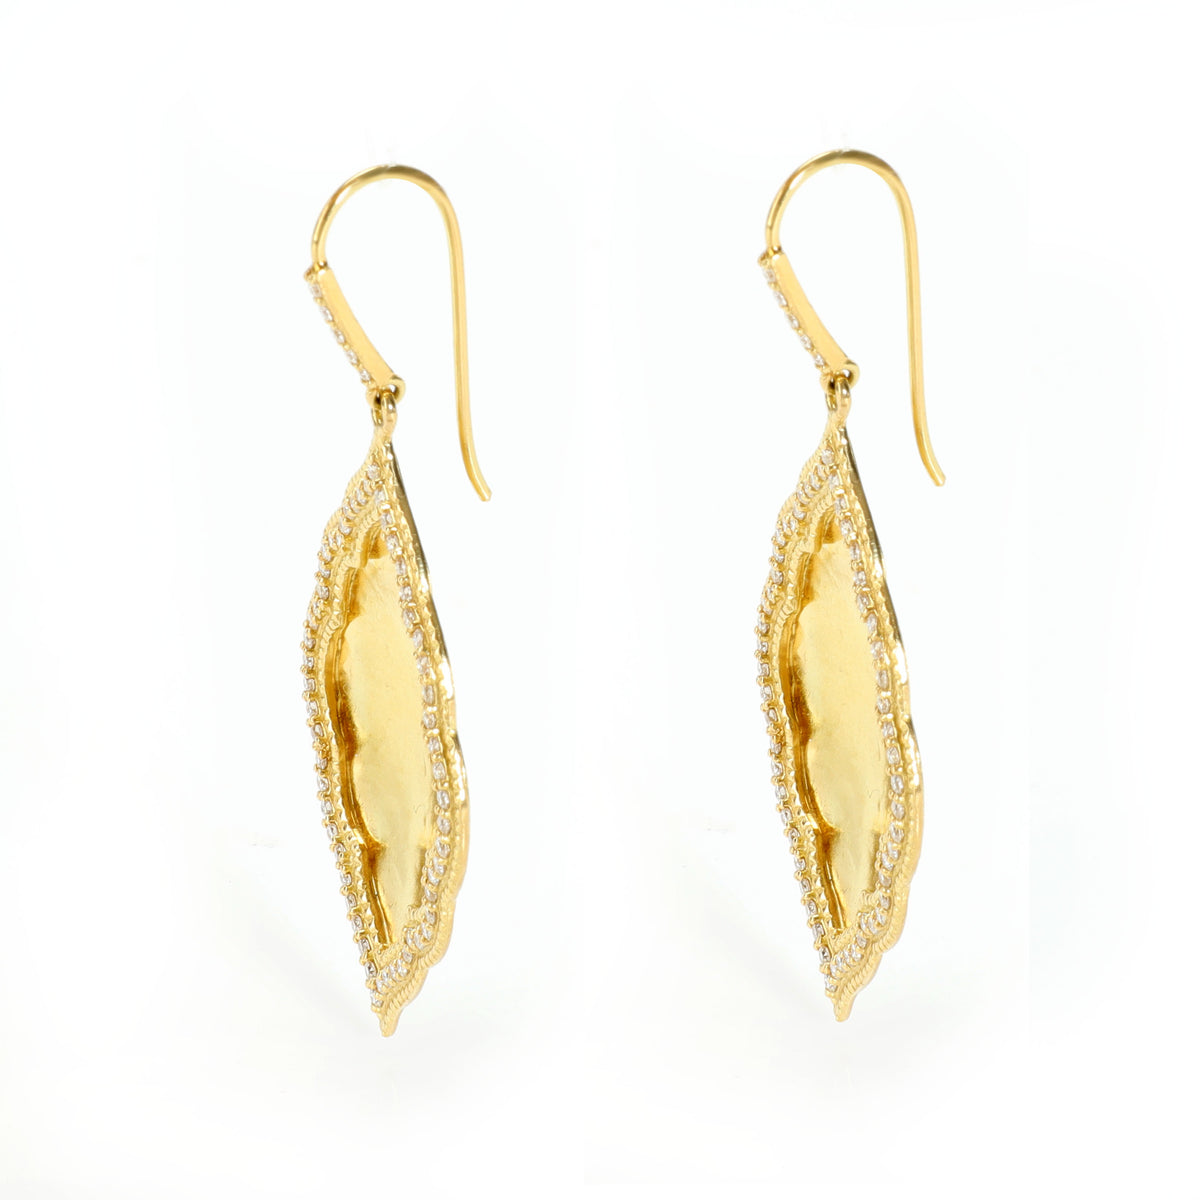 Amrapali Diamond Sohalia Drop Earrings in 18K Yellow Gold (1.04 ctw)